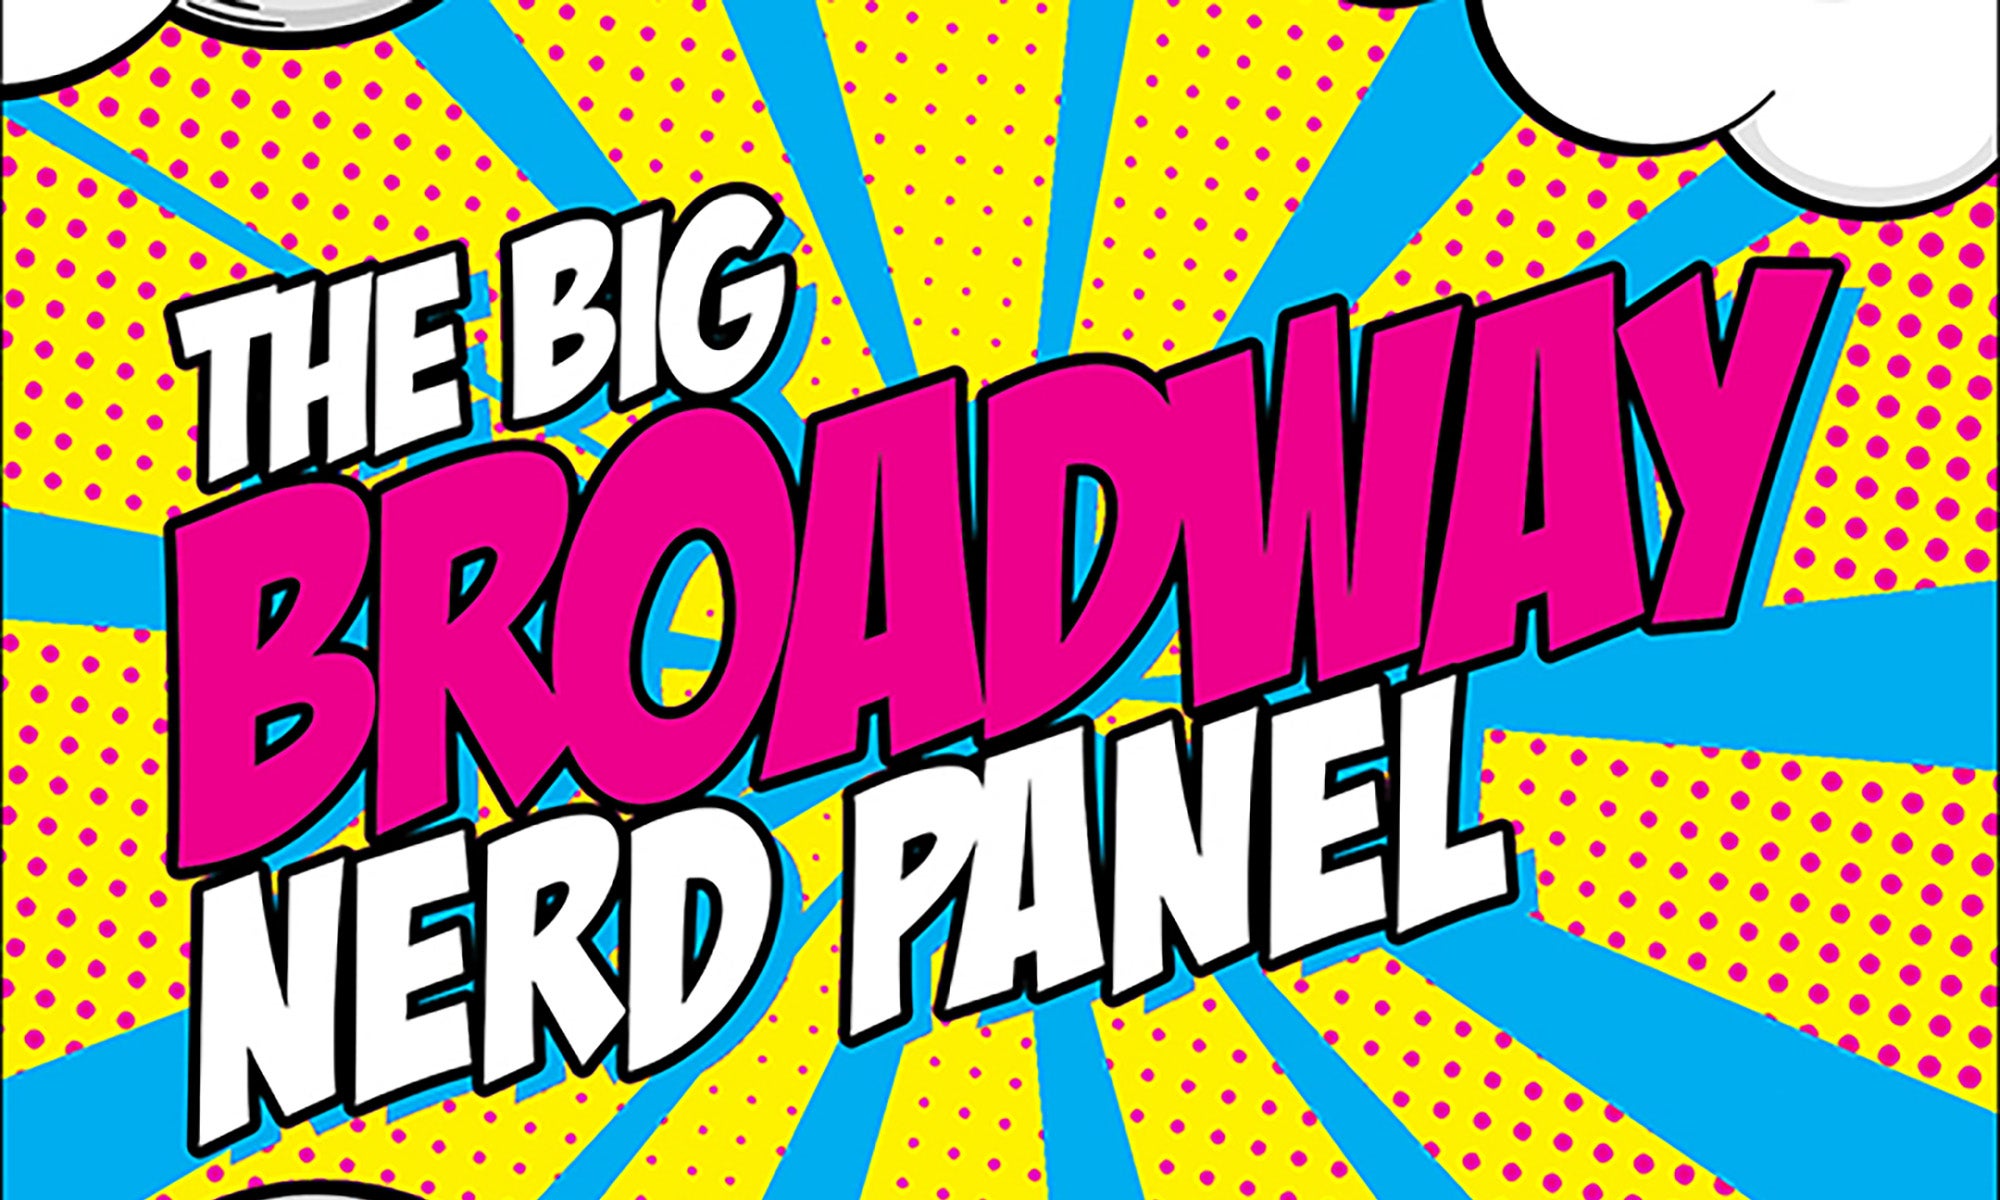 The Big Broadway Nerd Panel